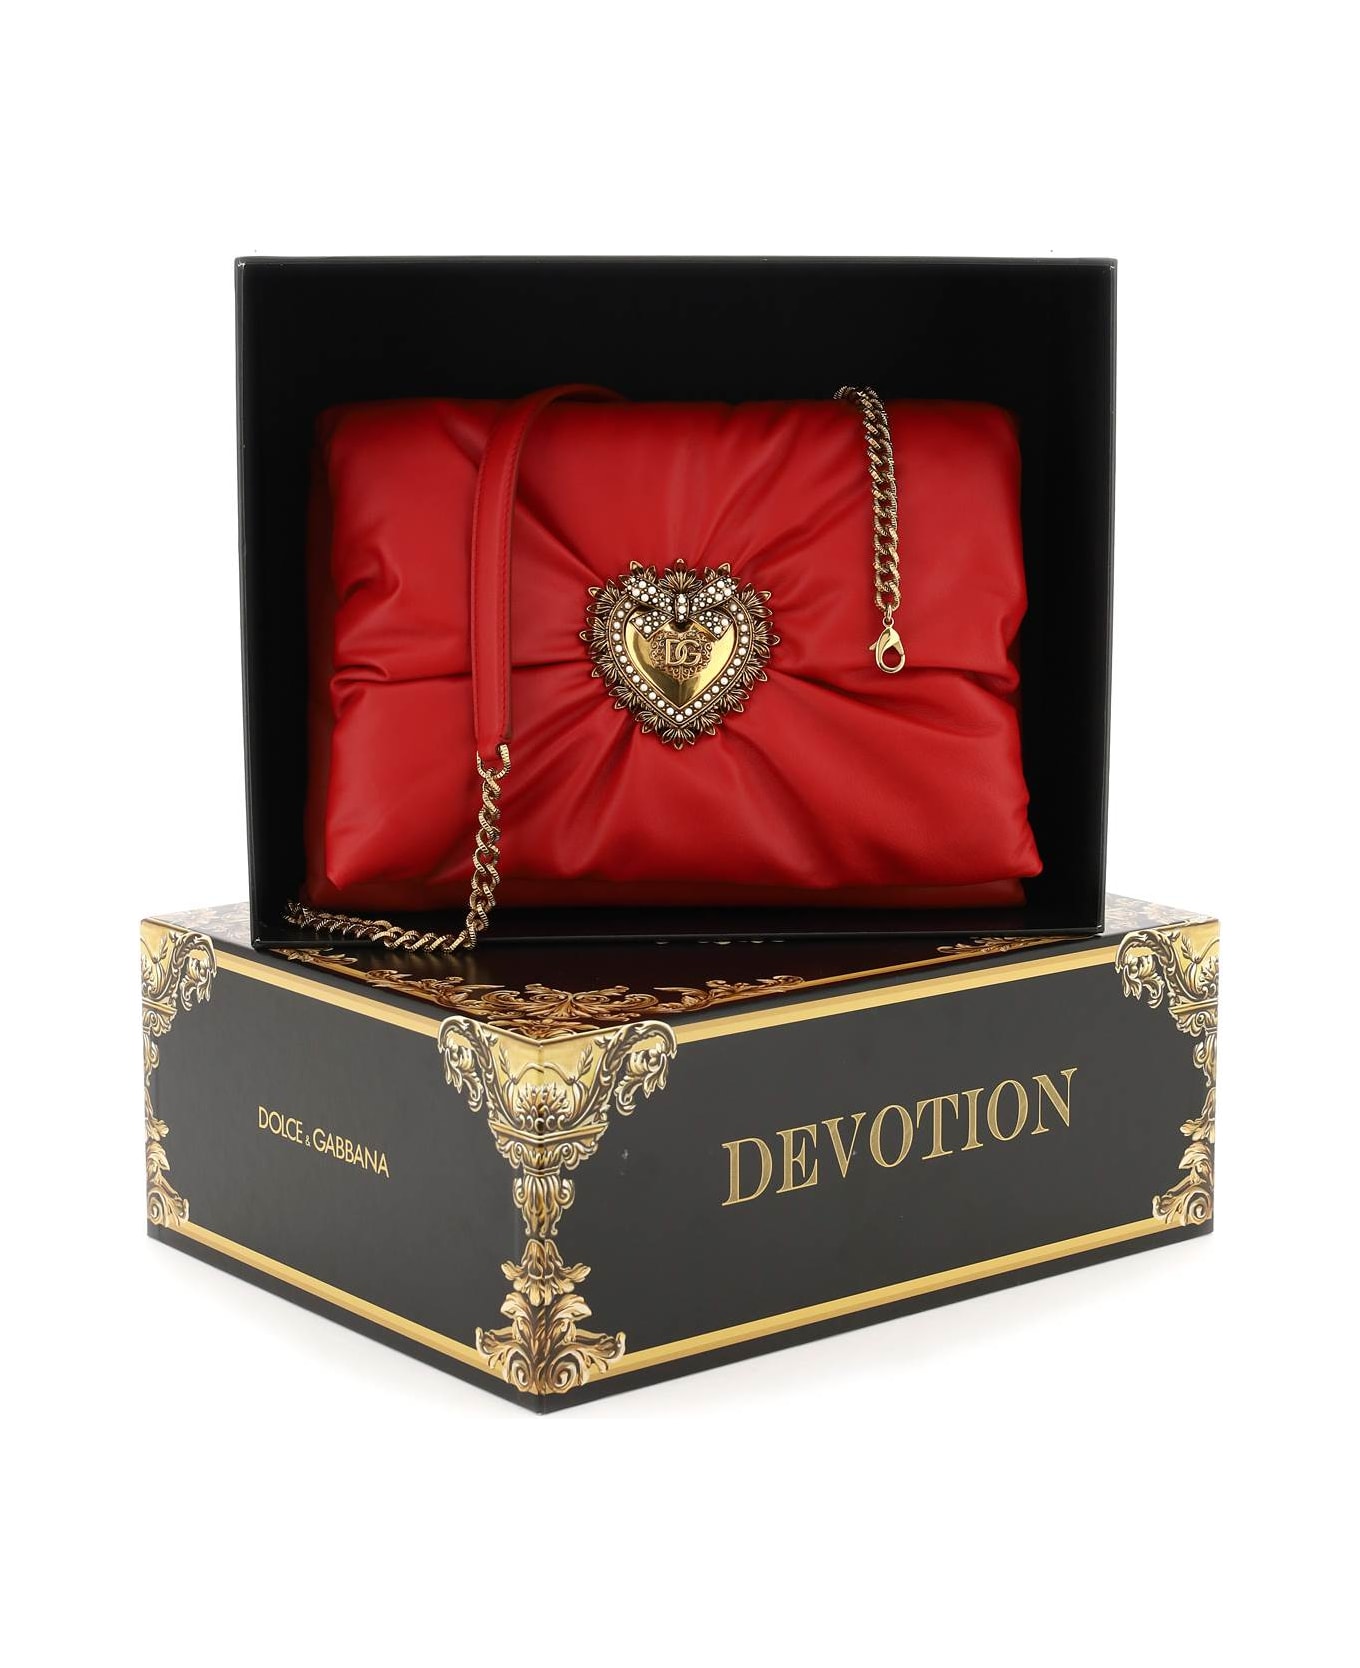 Dolce & Gabbana 'devotion' Soft Crossbody Bag - ROSSO INTENSO (Red)